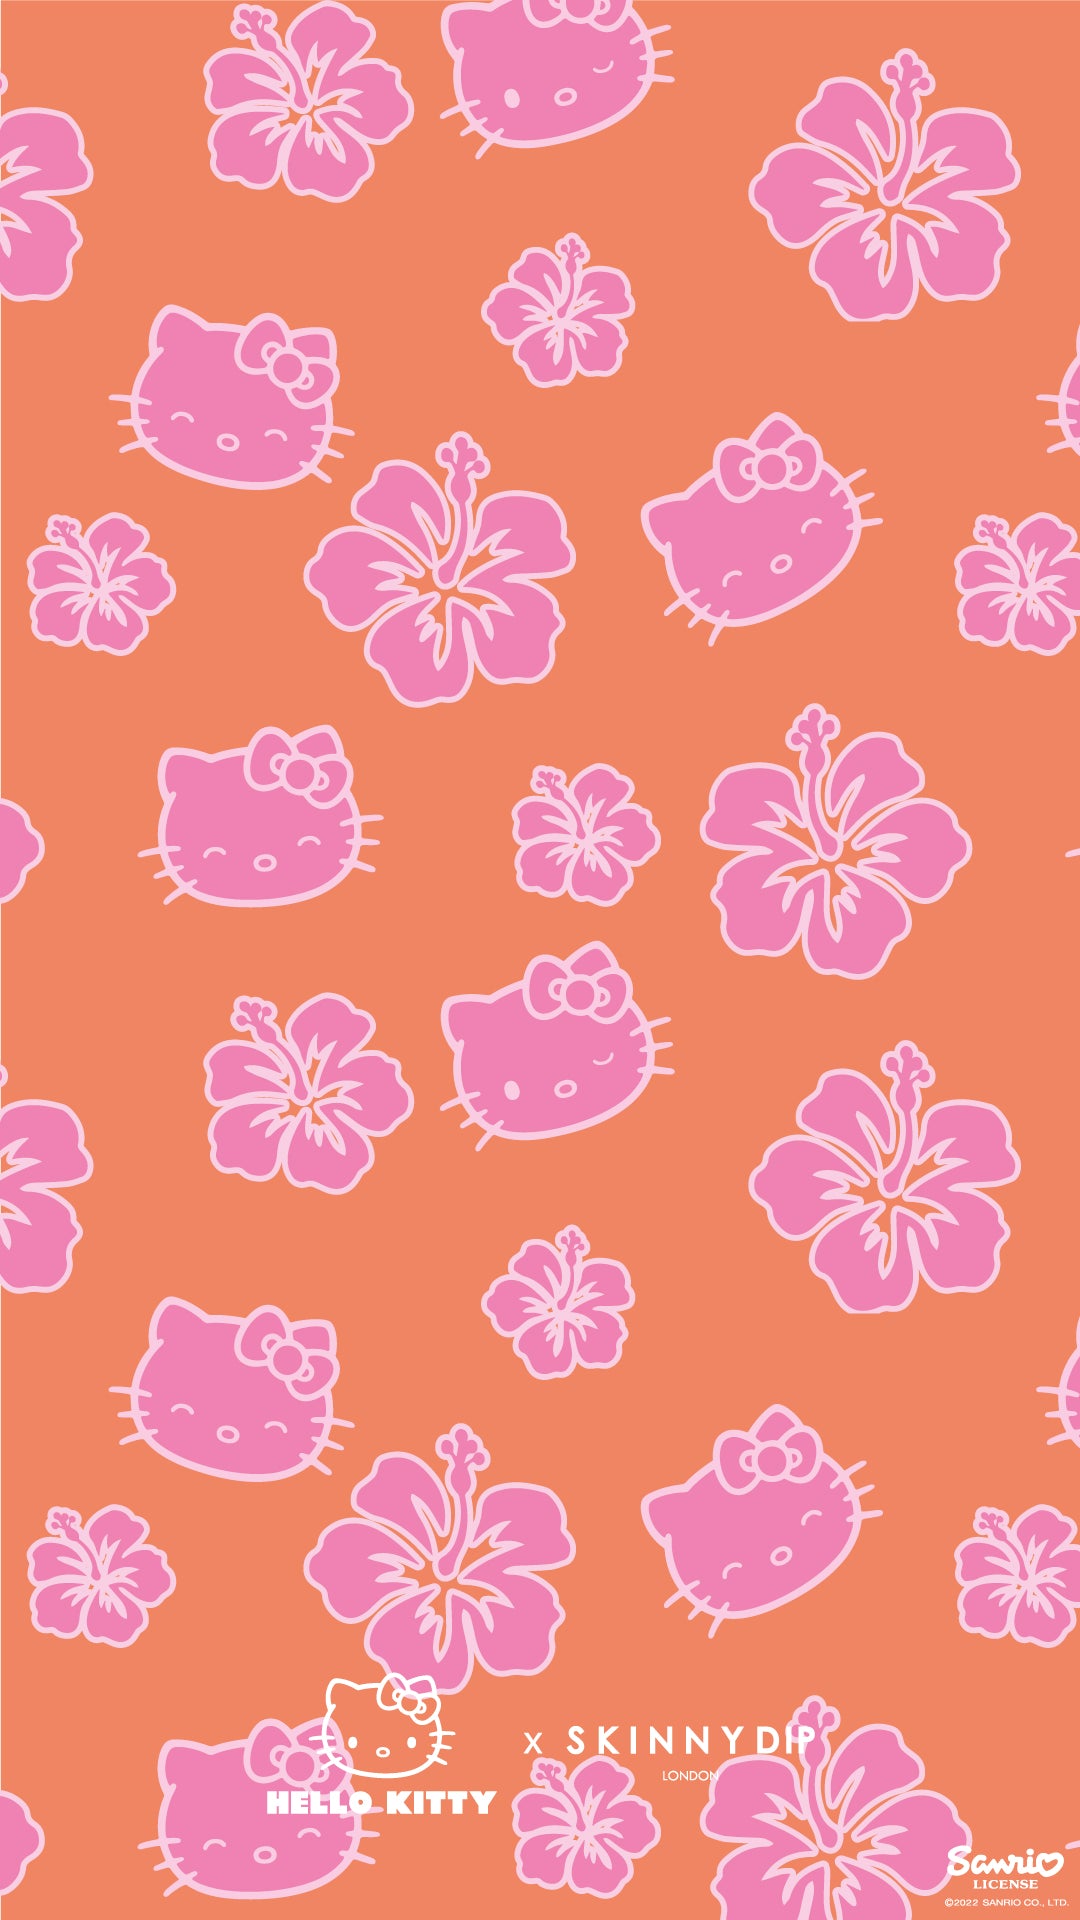 Hello Kitty x Skinnydip Drop 2 Phone Wallpaper 11